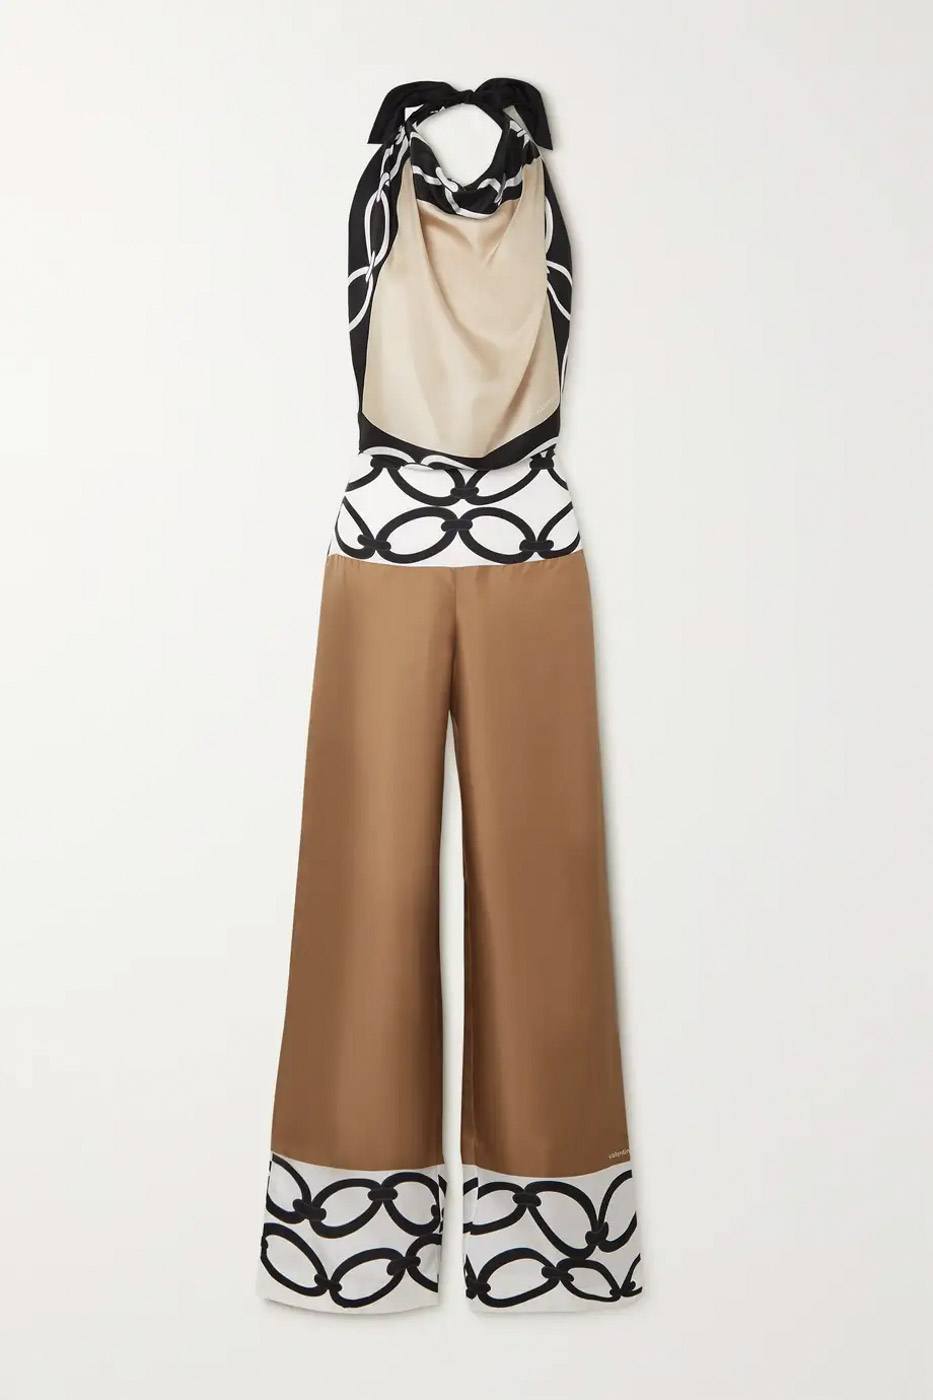 36 Valentino Open Back Halterneck Printed Silk Twill Jumpsuit $5,500 Net A Porter.com